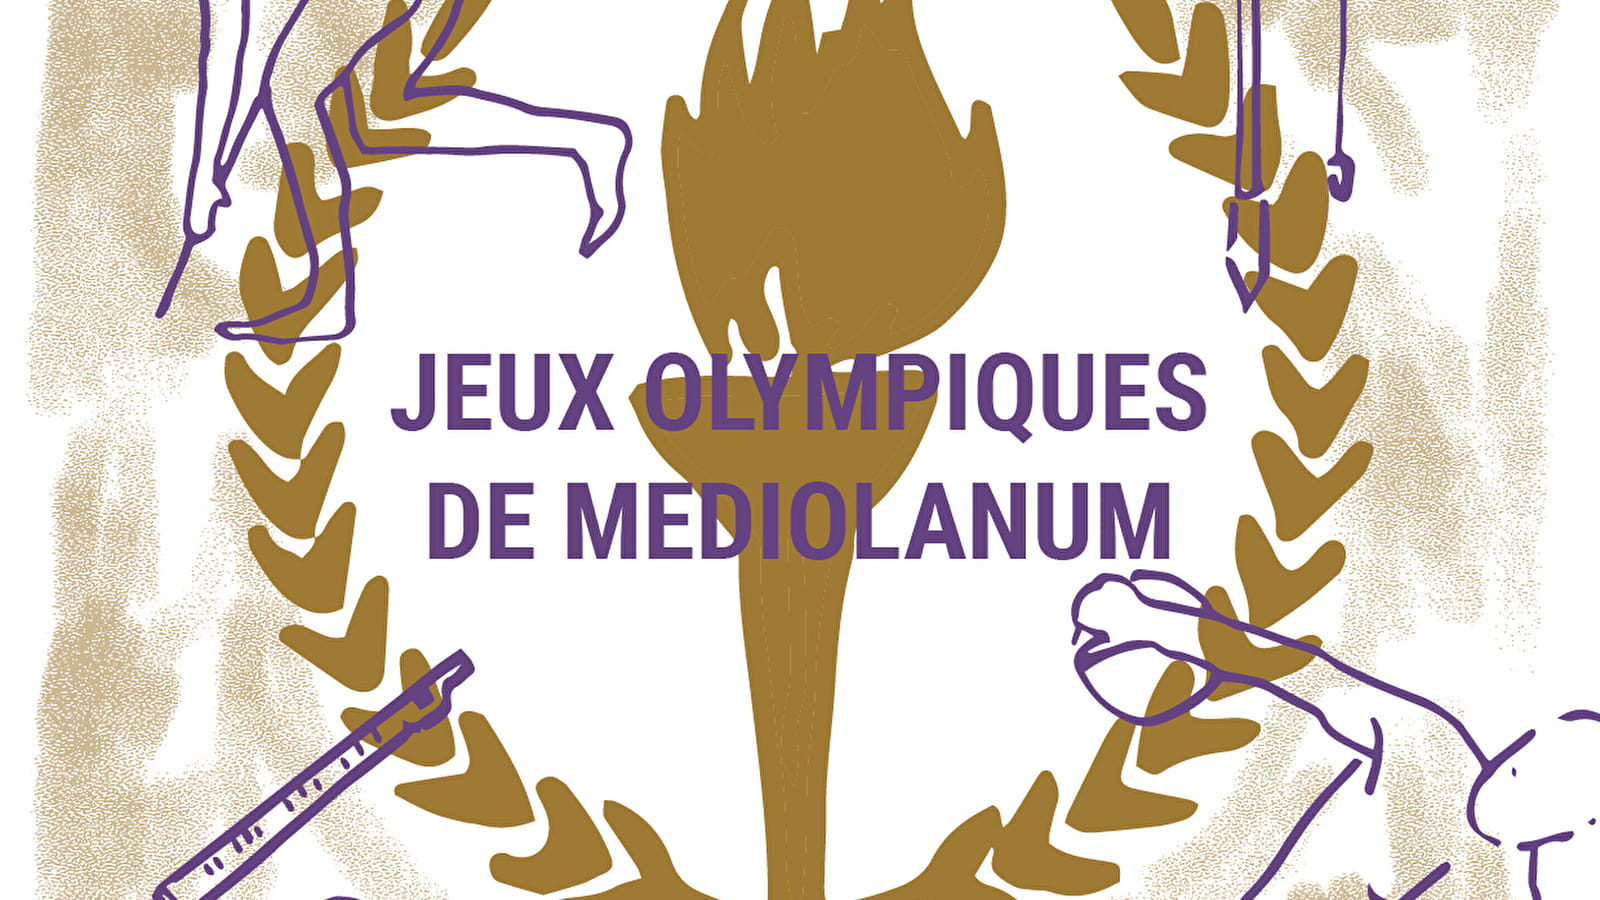 Mediolanum Olympic Games